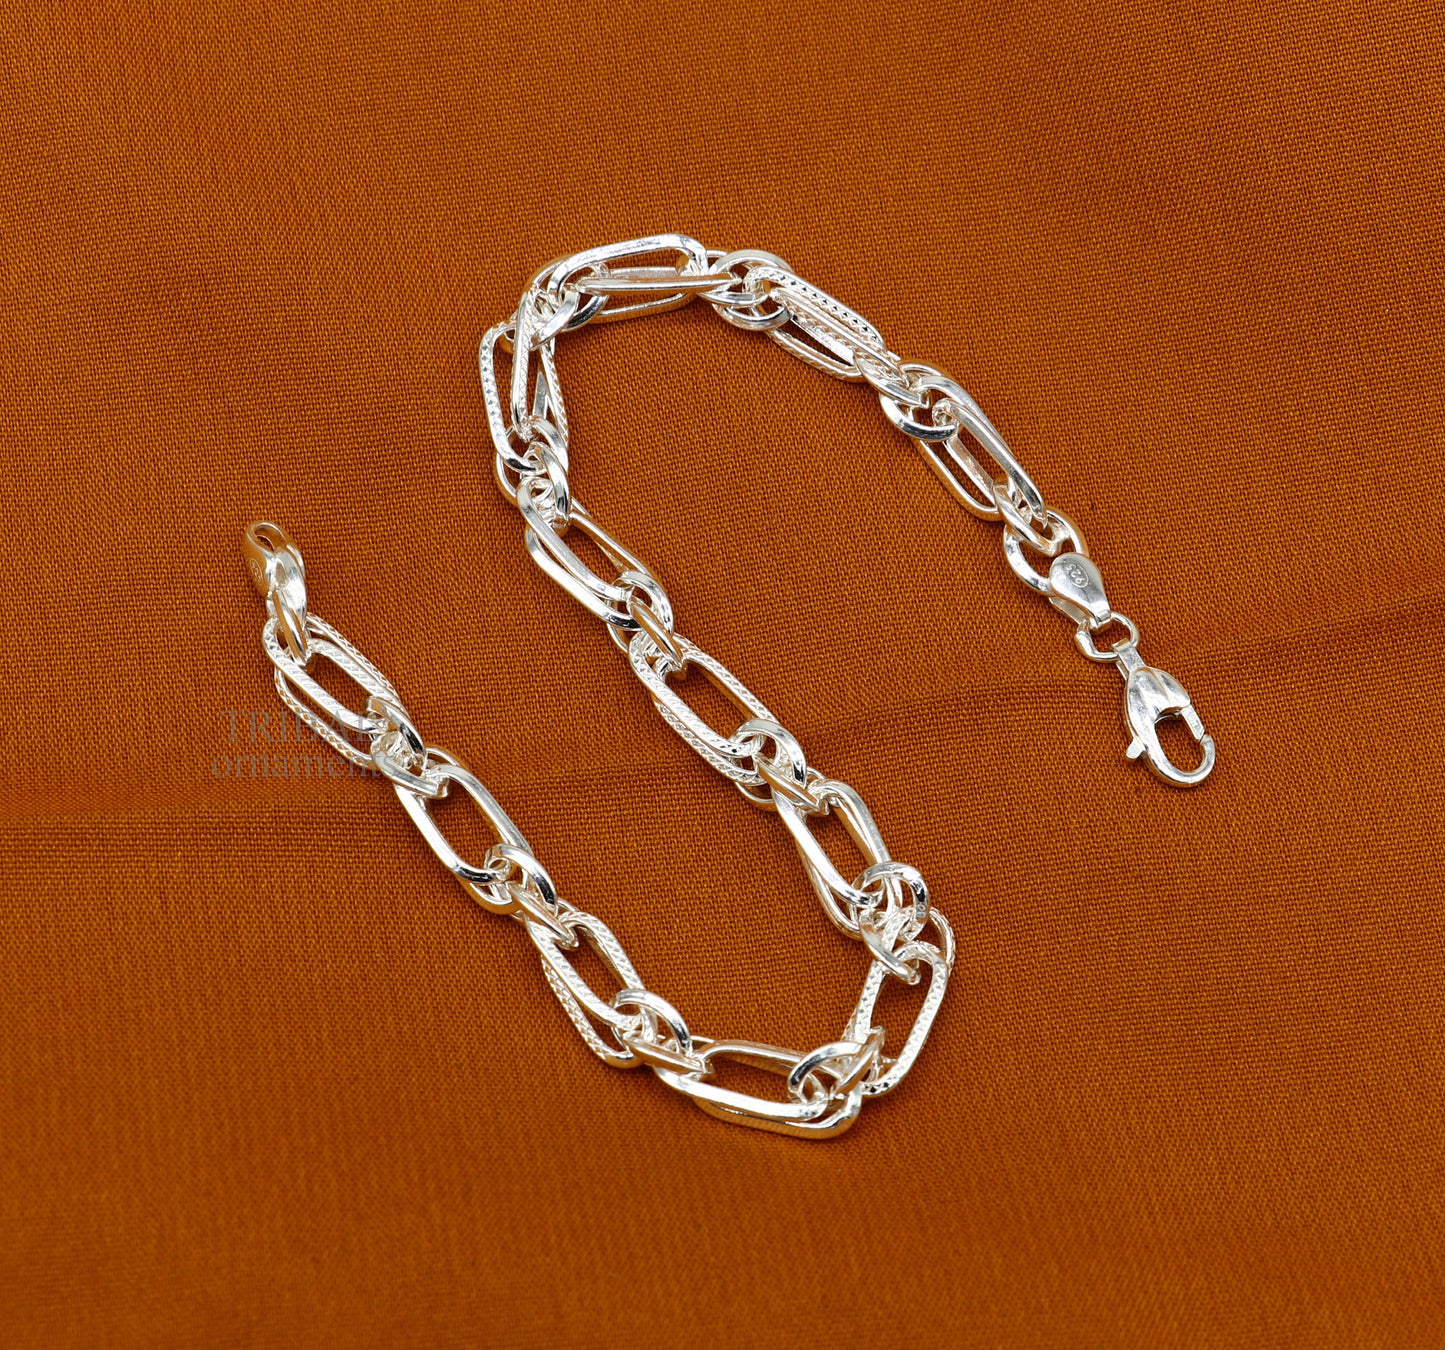 Glossy shine 925 sterling silver handmade Bracelet for girl's Dainty Silver Bracelet, Chain Bracelet, Minimal Jewelry, Gift Women nsbr527 - TRIBAL ORNAMENTS